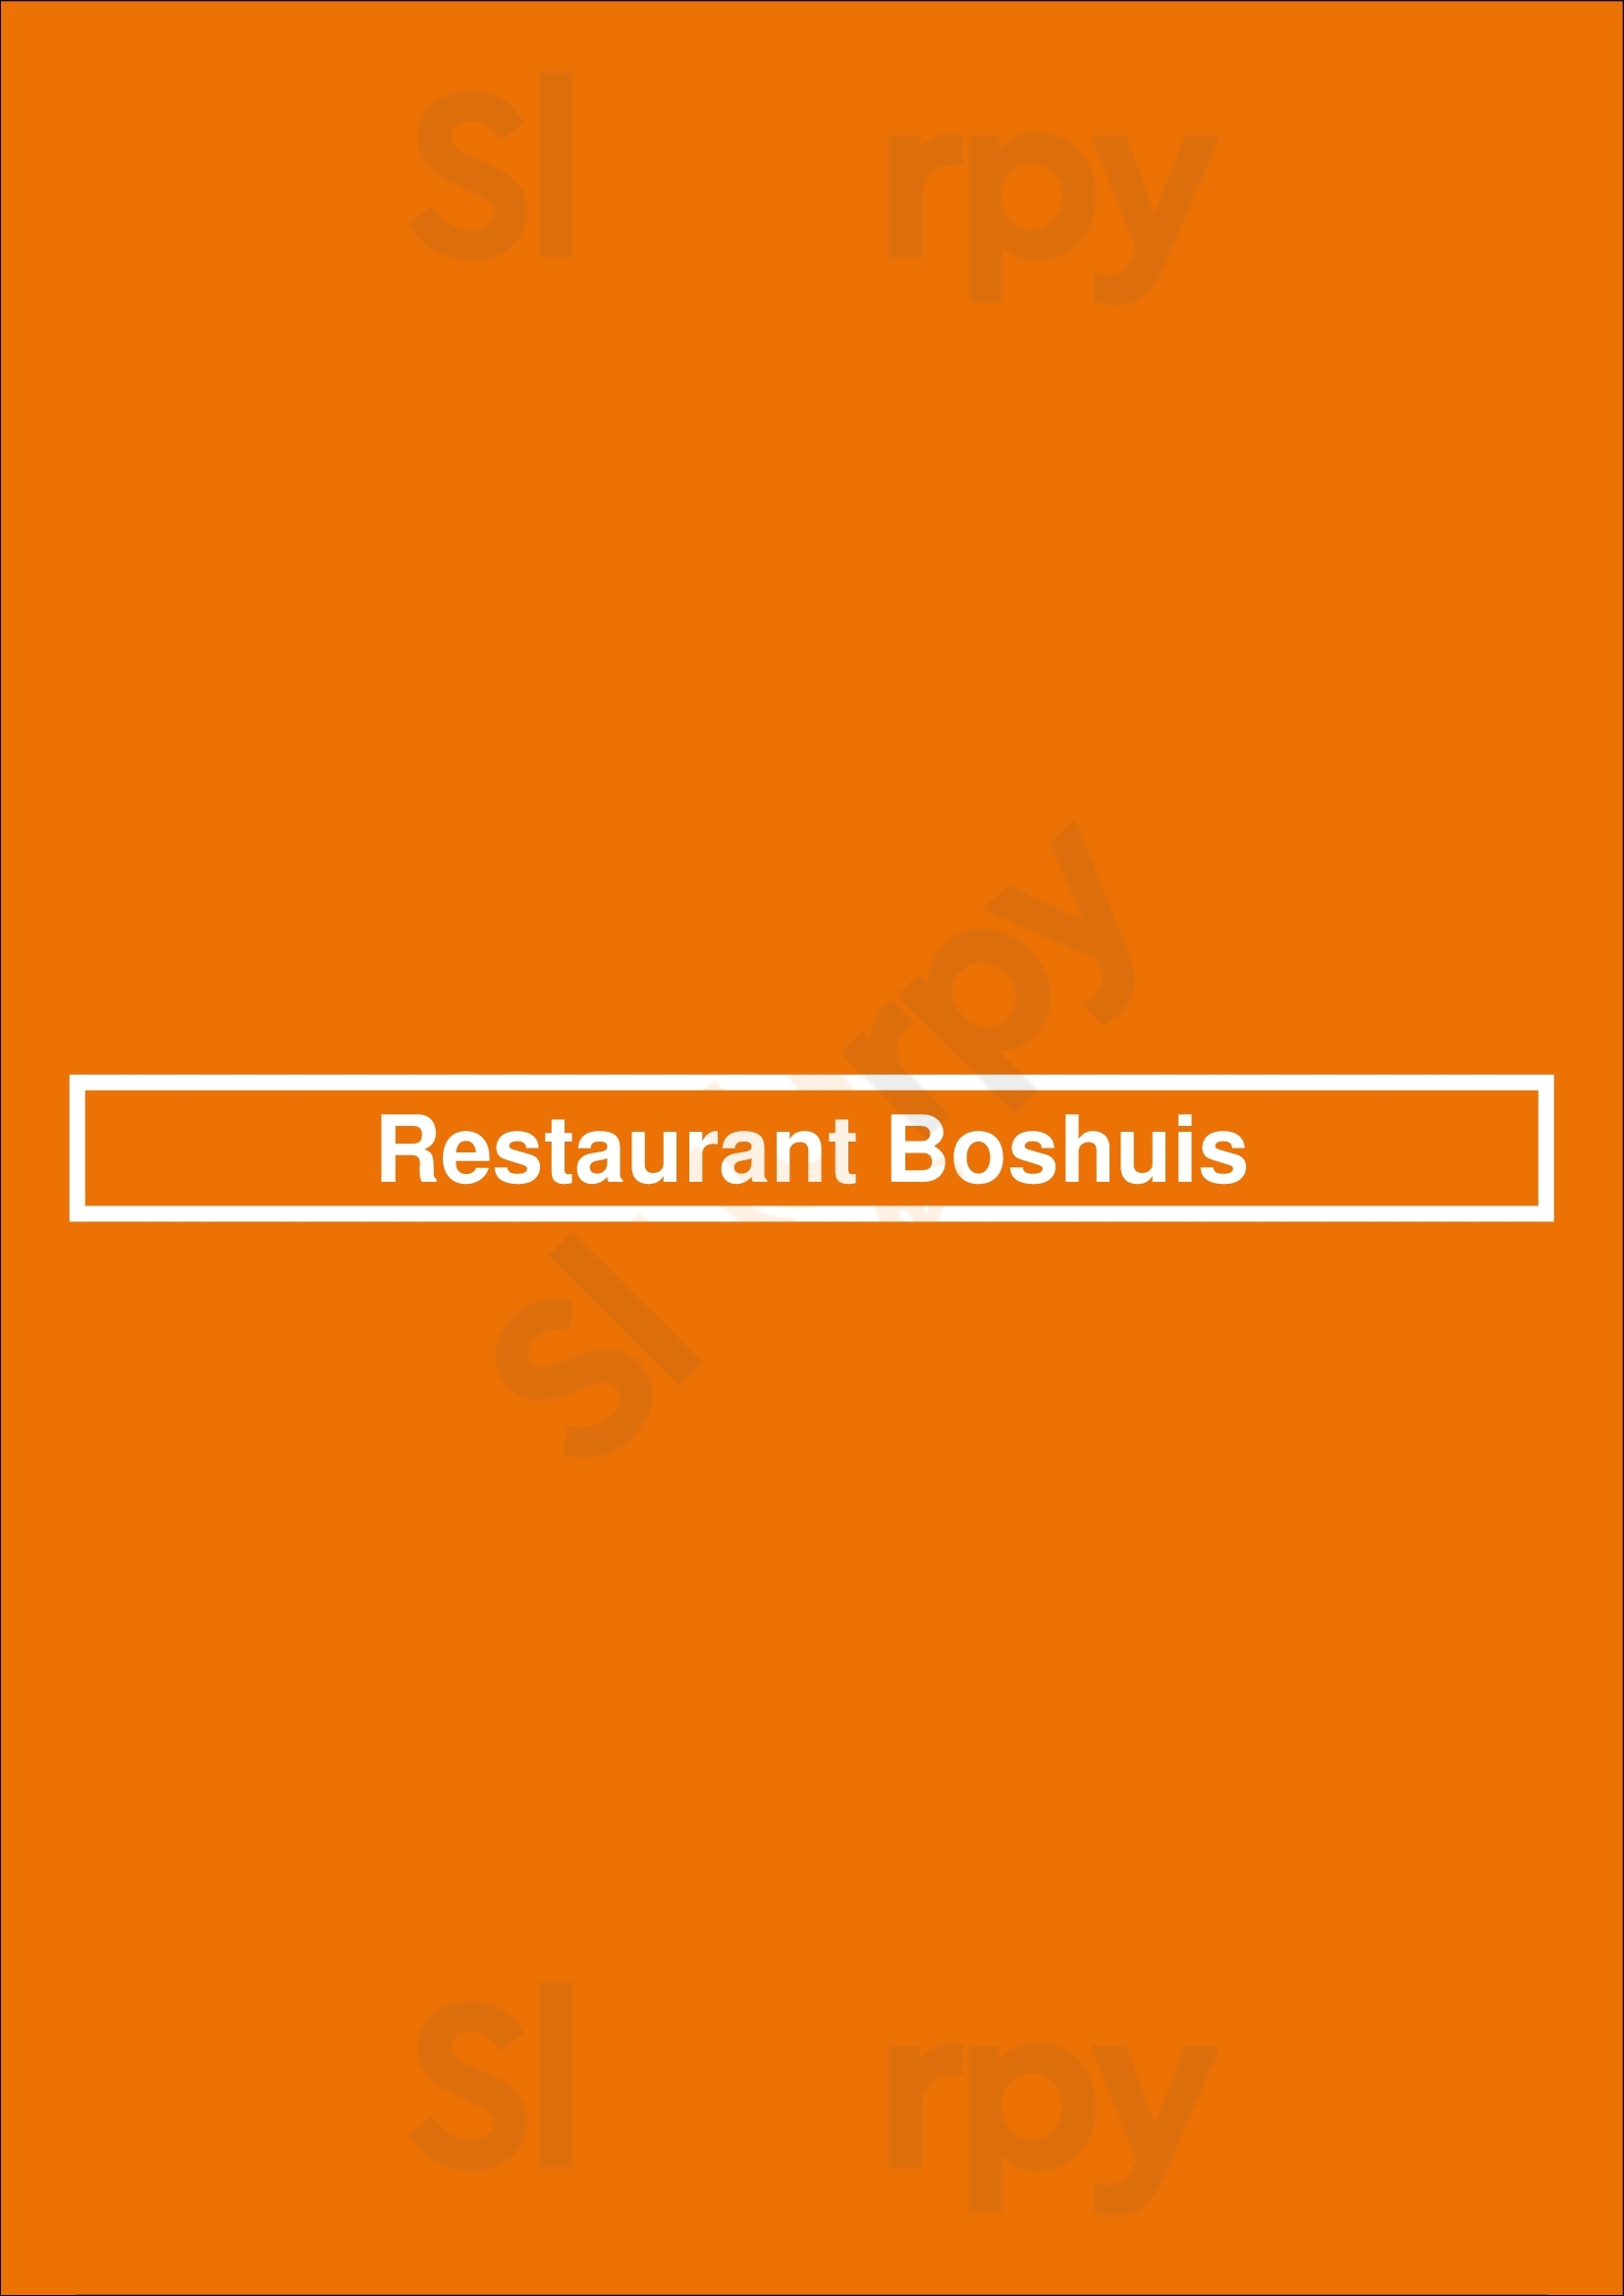 Restaurant Boshuis Arnhem Menu - 1